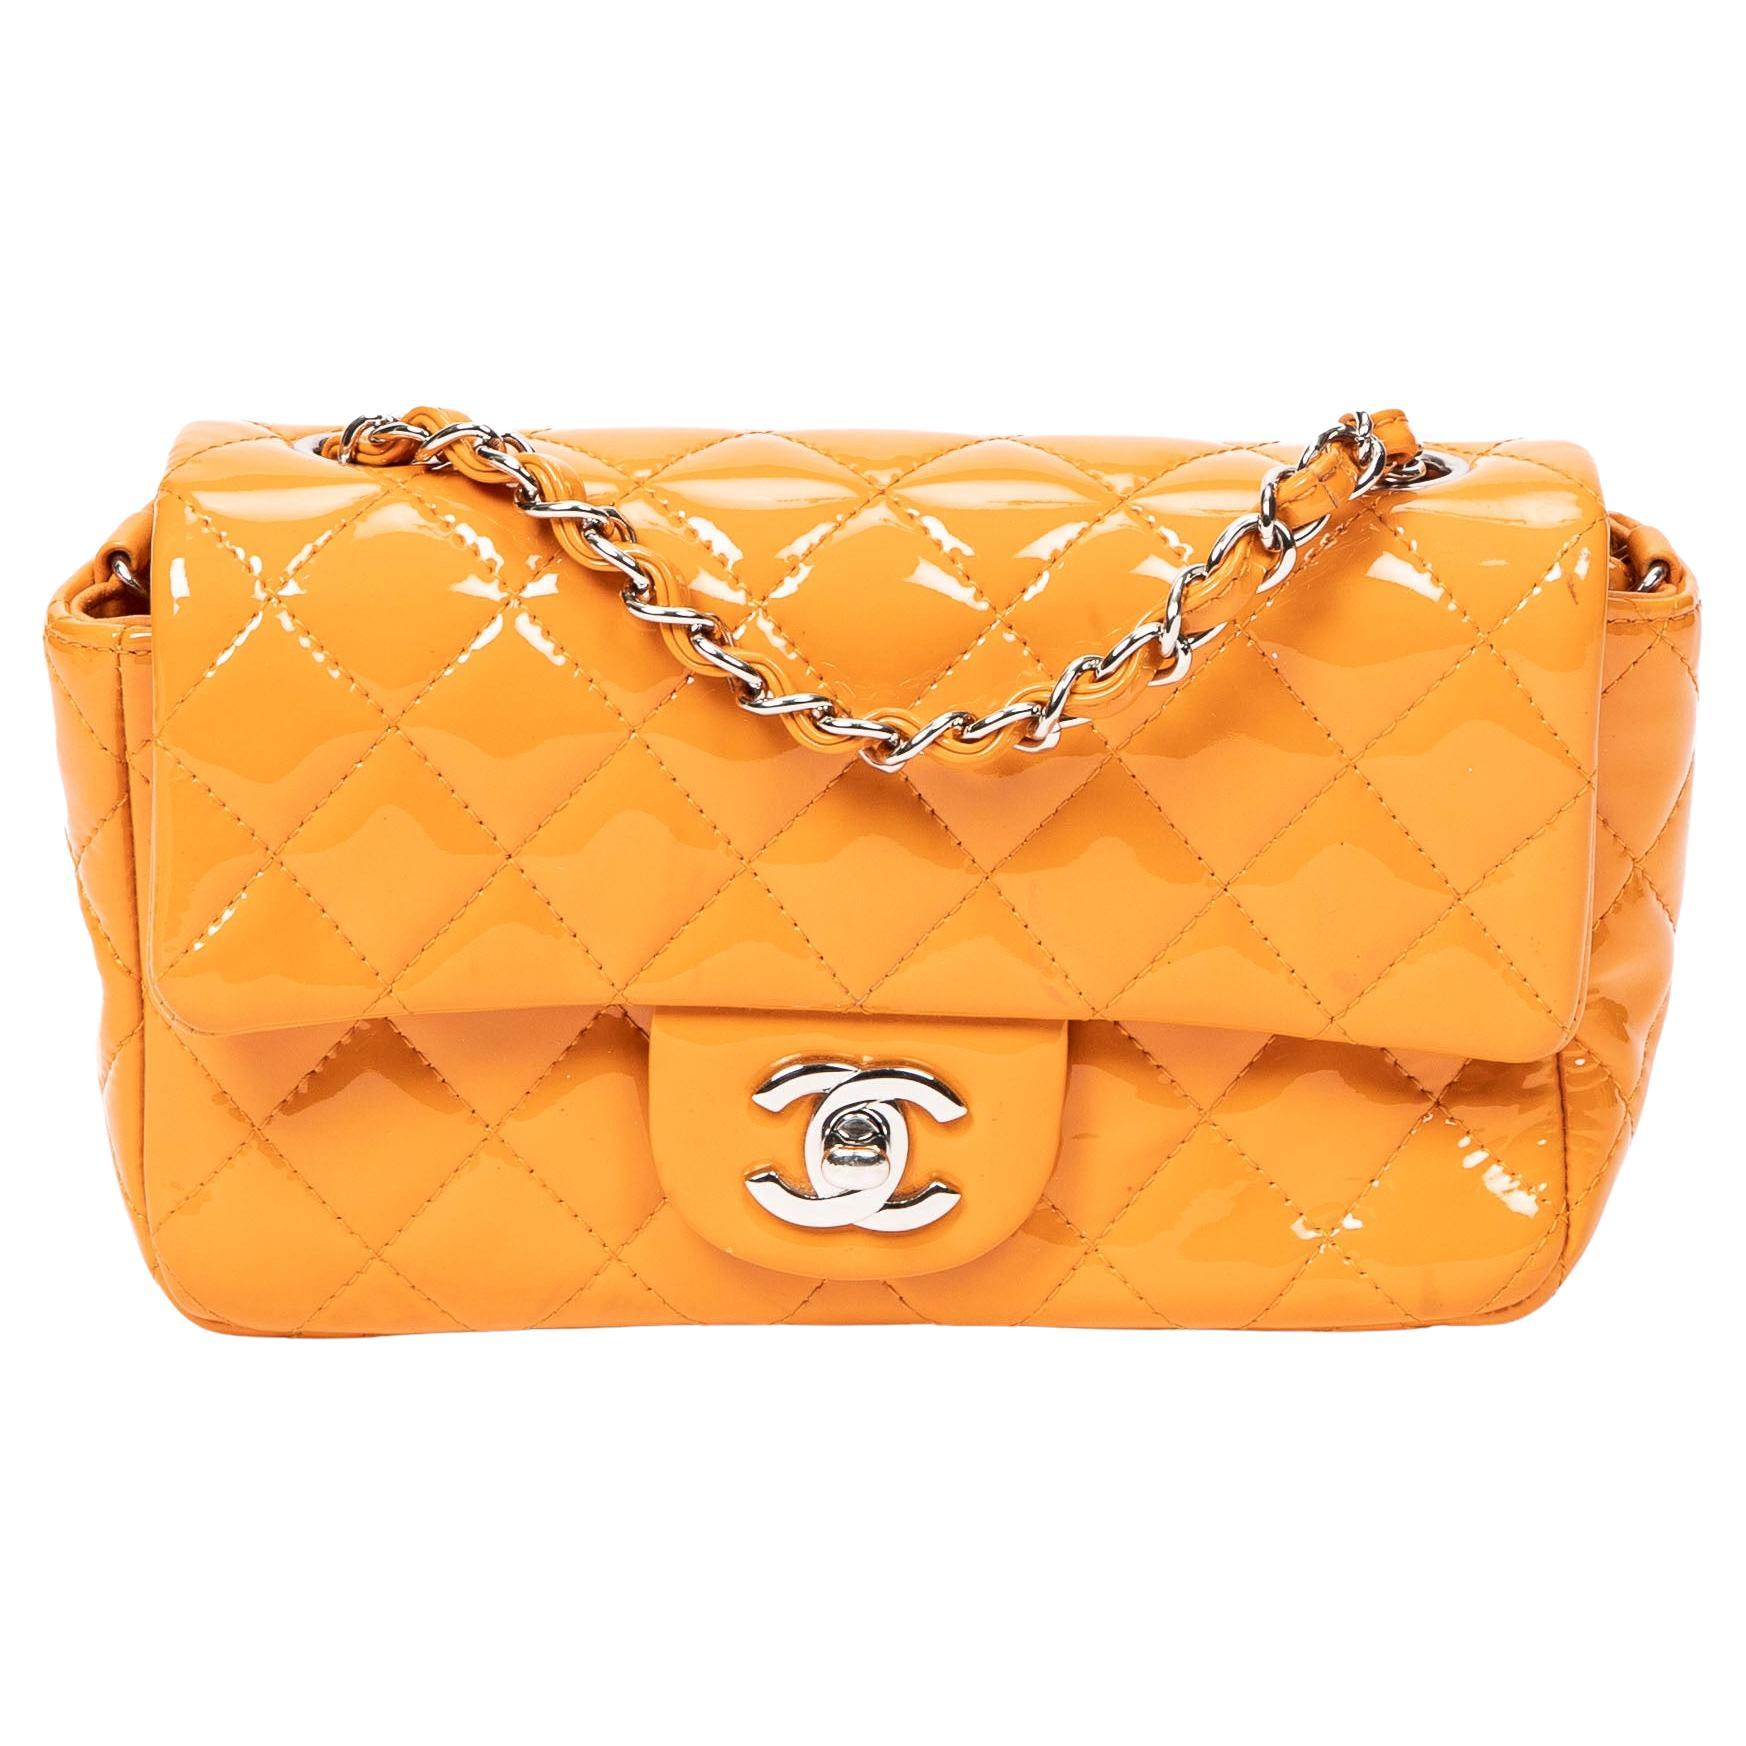 Chanel 2014 Orange Patent Leather Mini Single Flap Bag